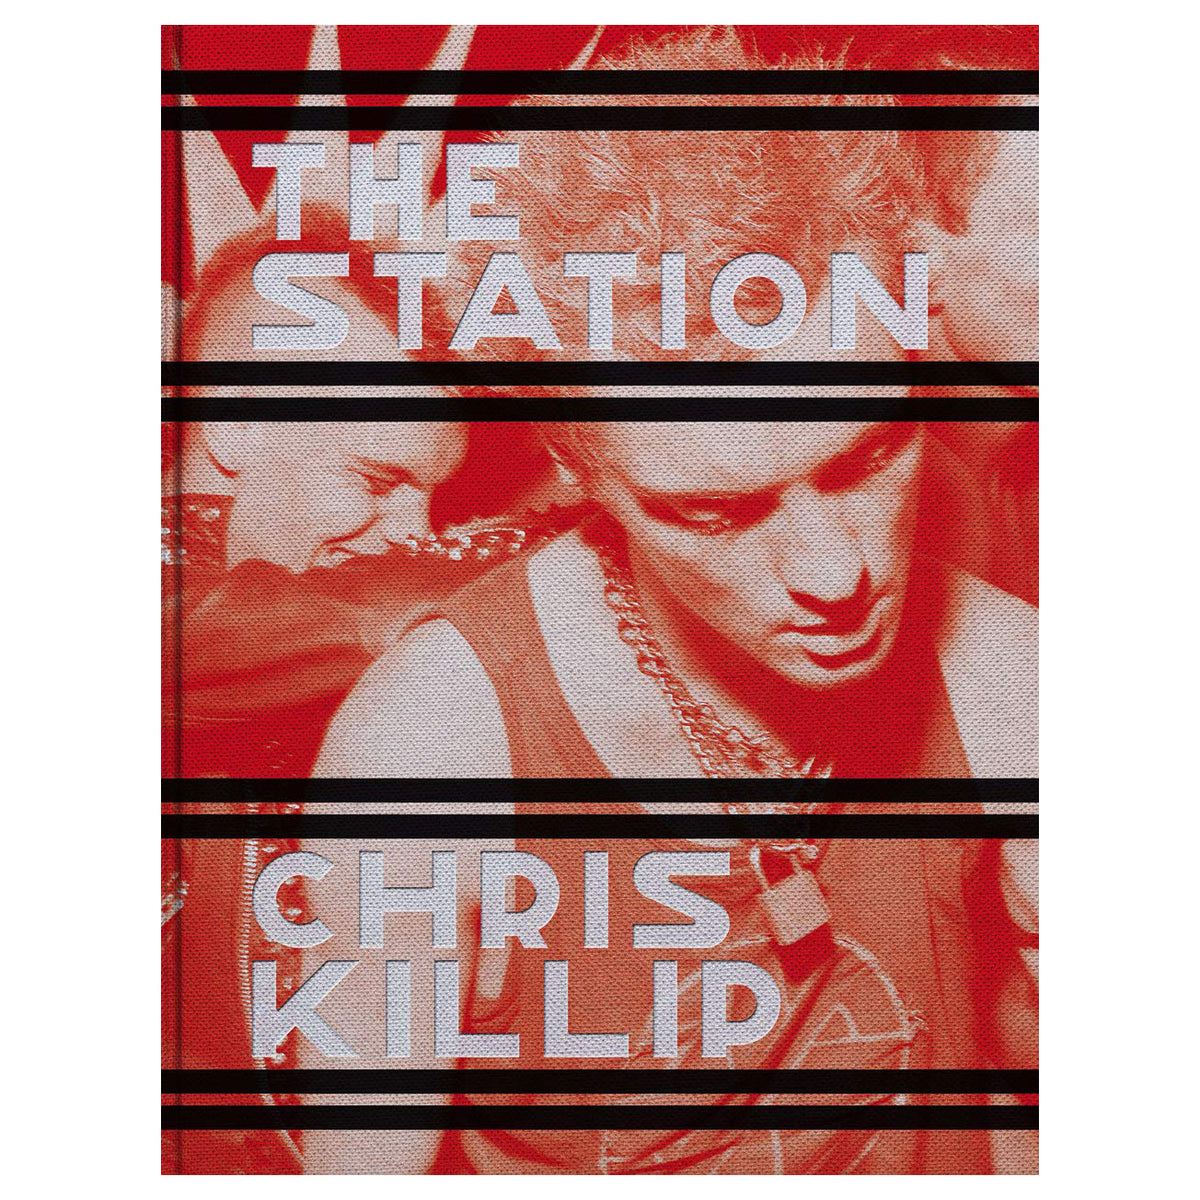 The Station Chris Killip